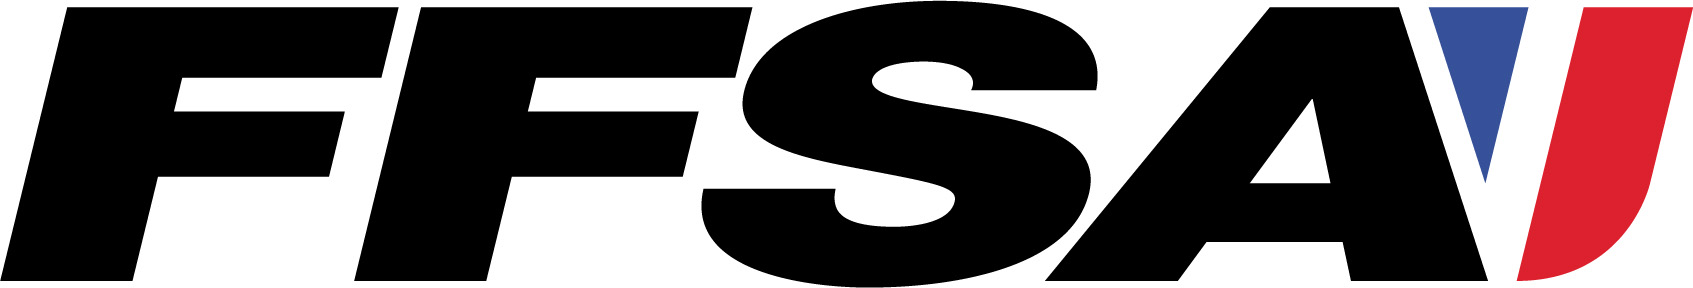 Federation francaise du sport automobile logo